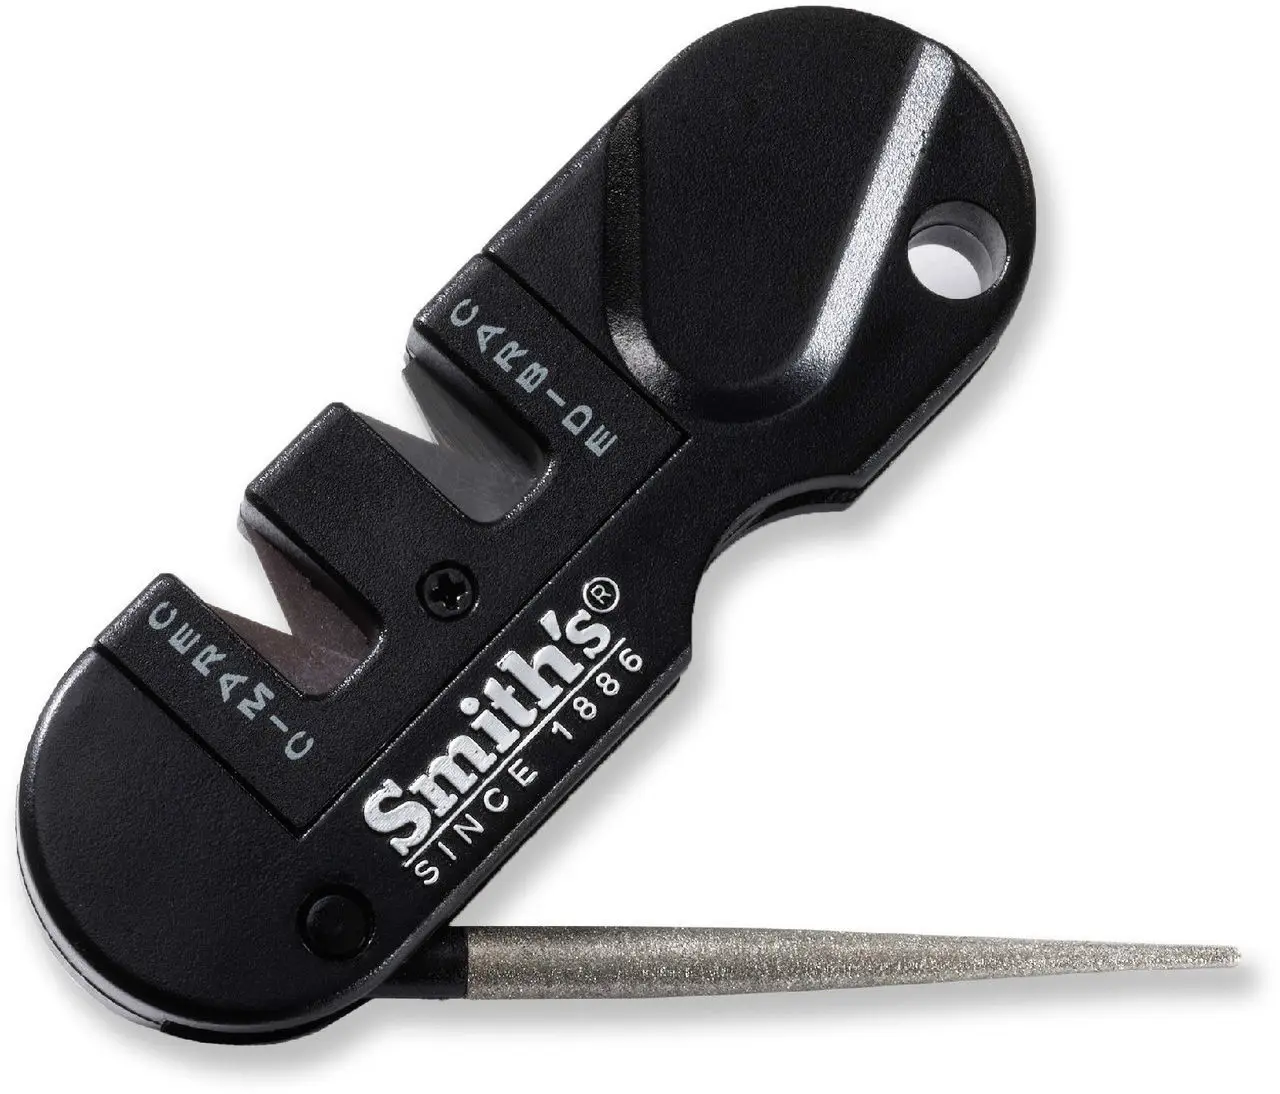 Smith’s PP1 Pocket Pal Multifunction Sharpener